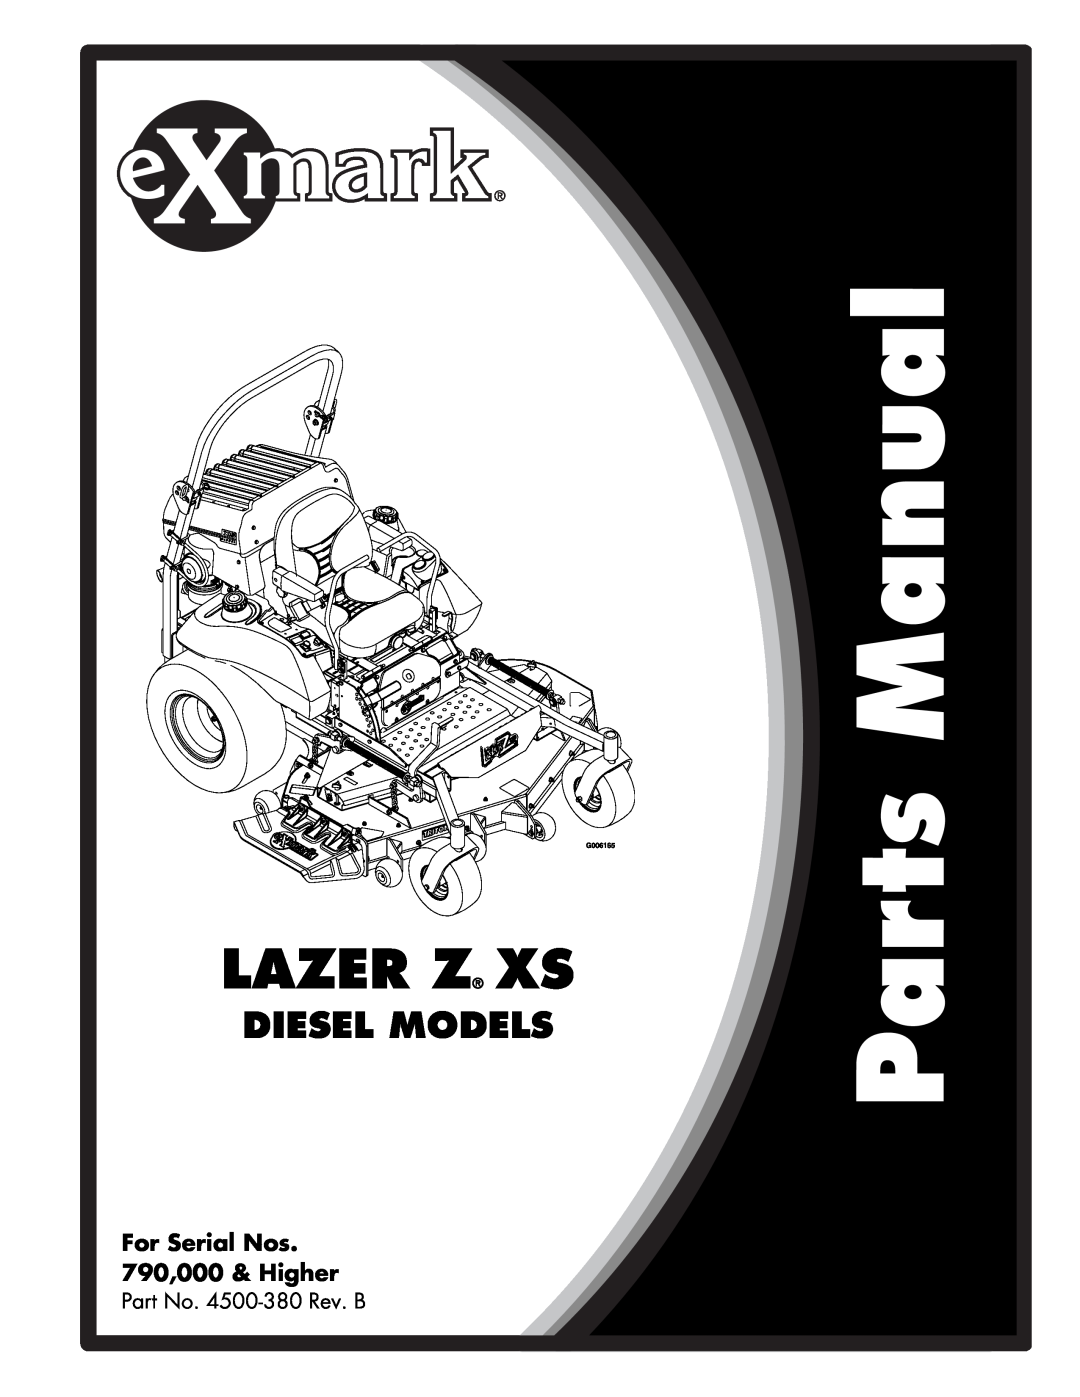 Exmark manual Lazer Z Xs, Diesel Models, For Serial Nos 790,000 & Higher, Part No. 4500-380Rev. B 